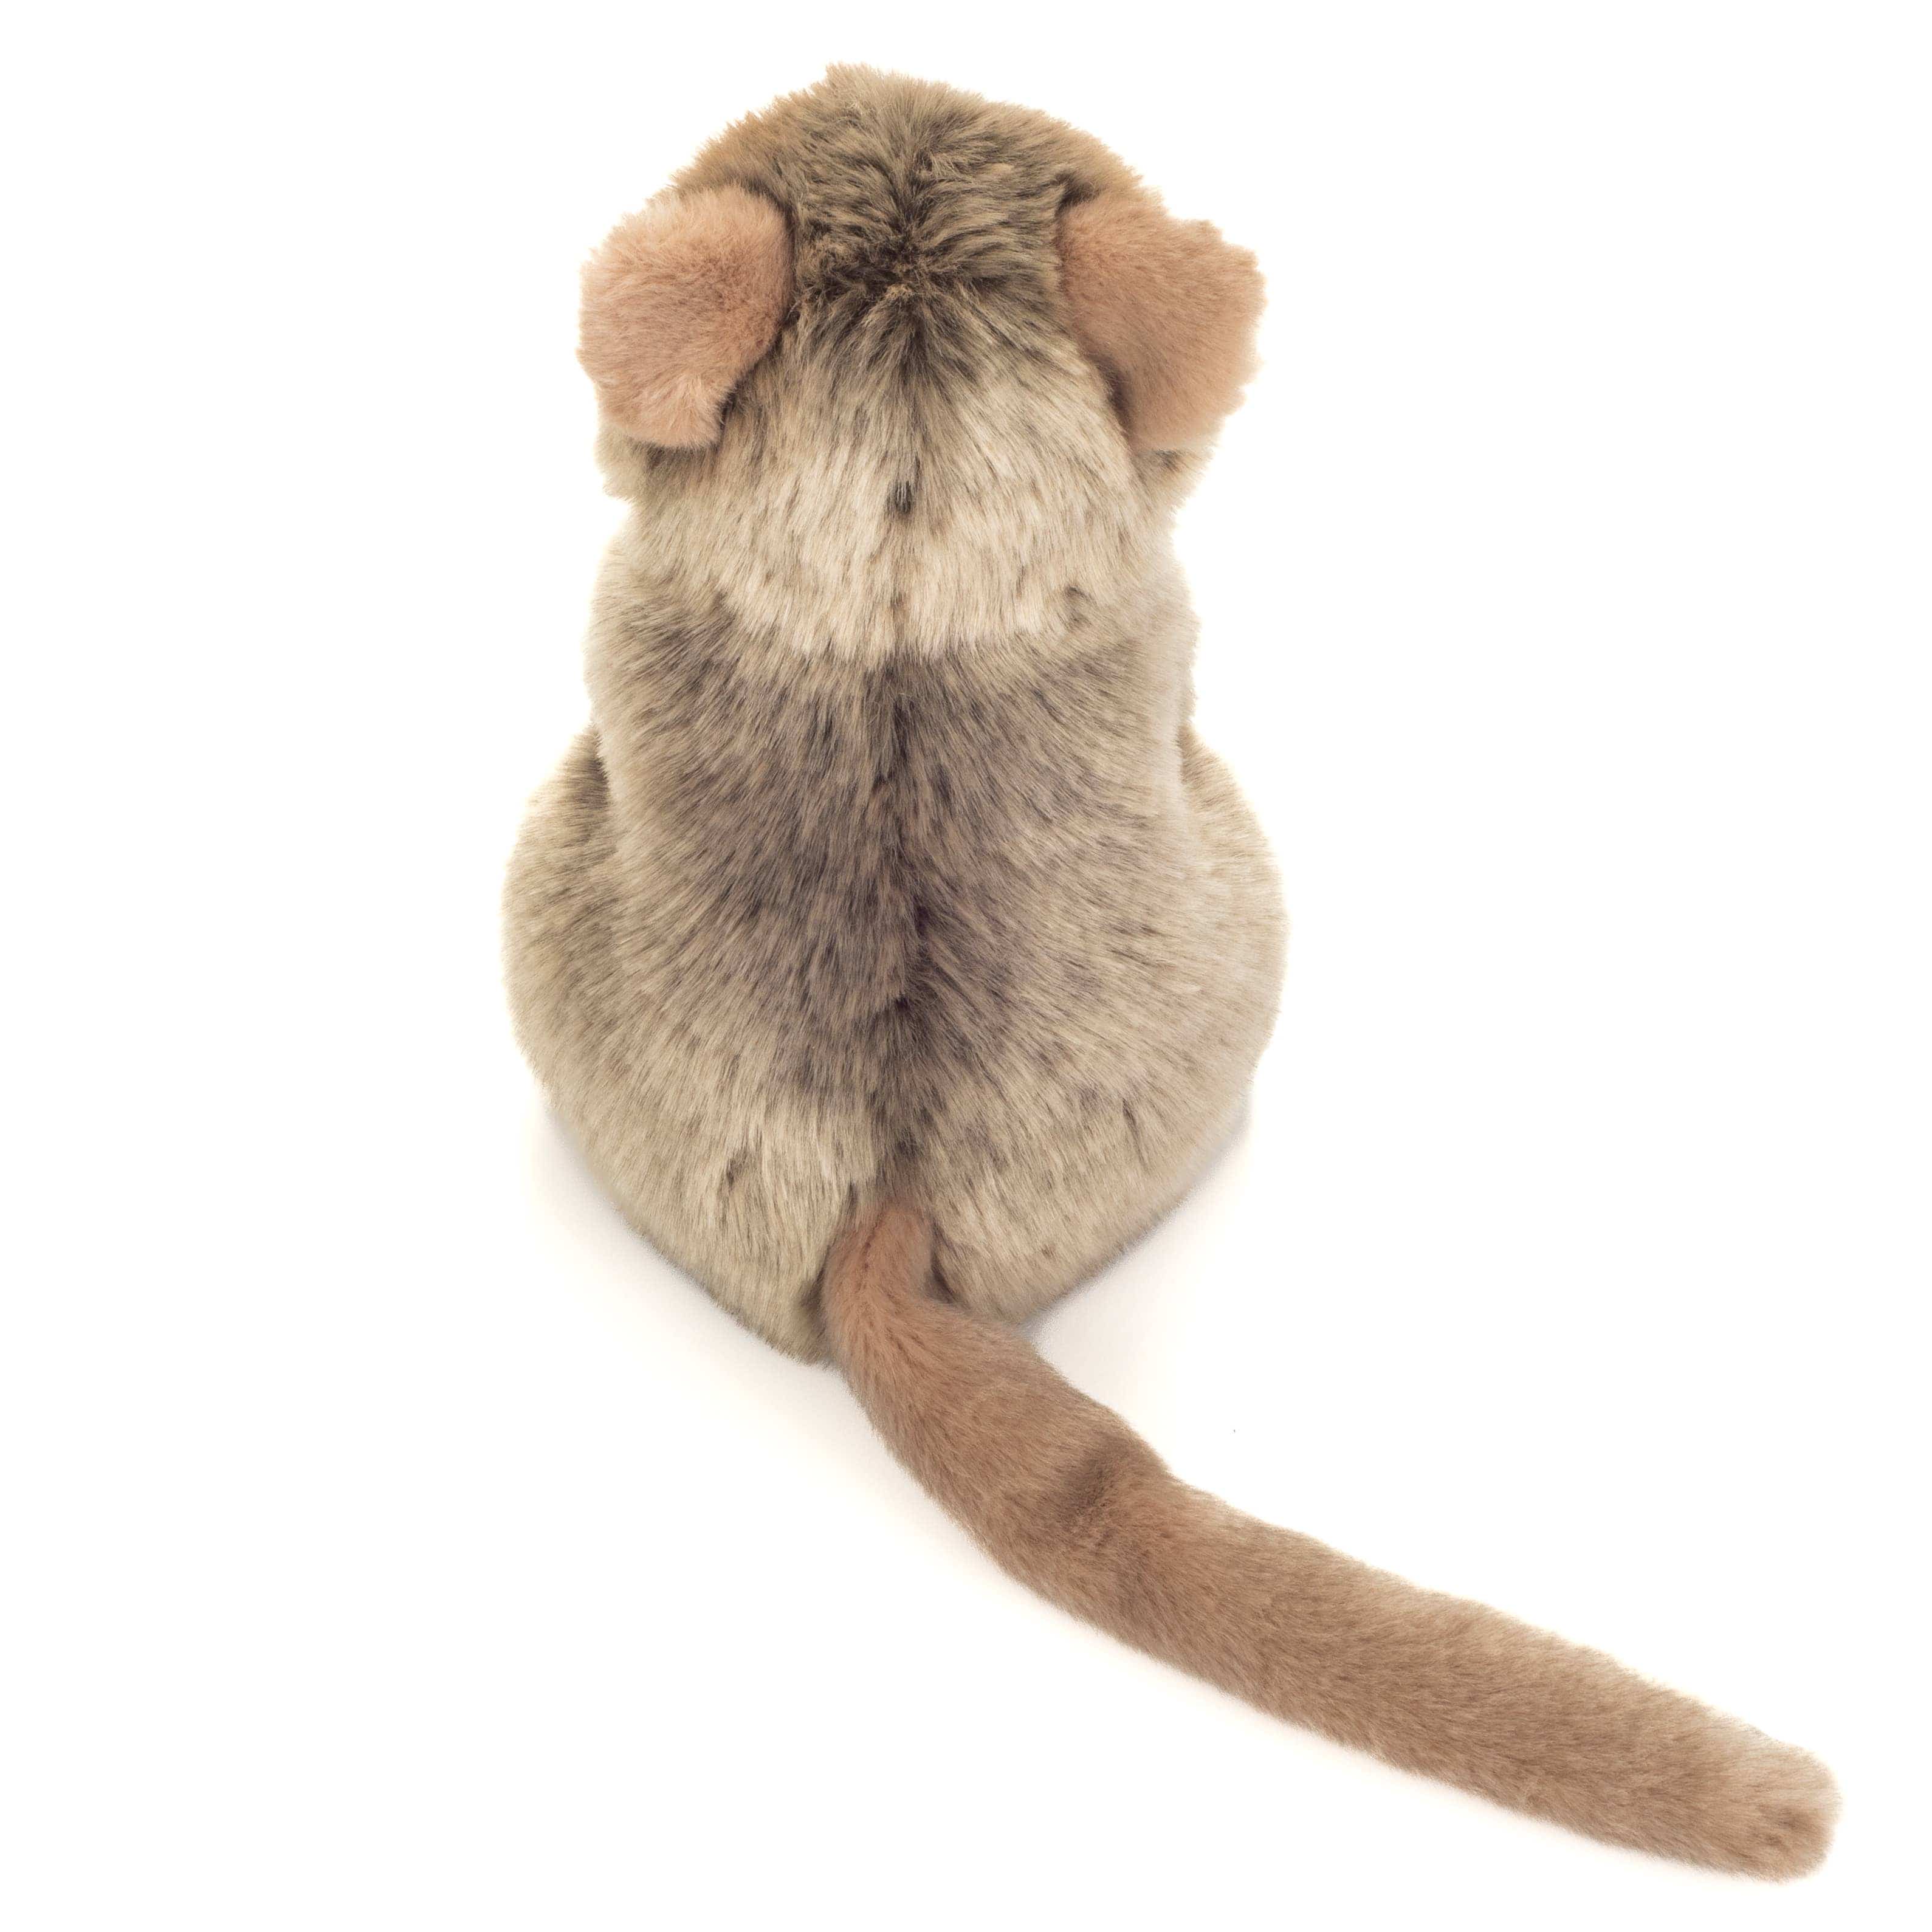 Plush  Mouse Lemur sitting 21 cm - Teddy Hermann Nature Collection